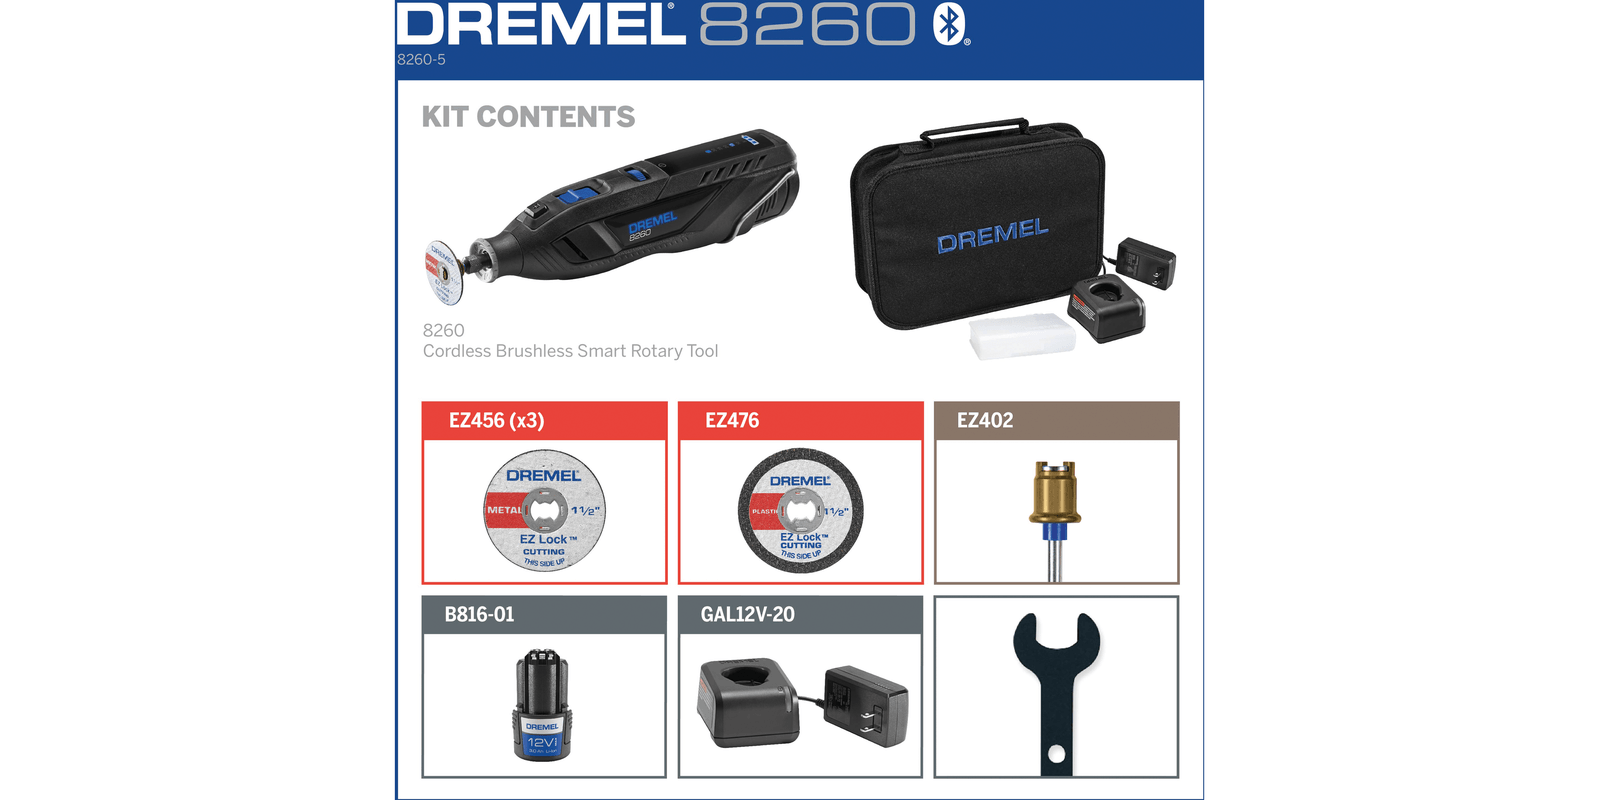 Buy Dremel 8260 F0138260JA Multifunction tool incl. rechargeables